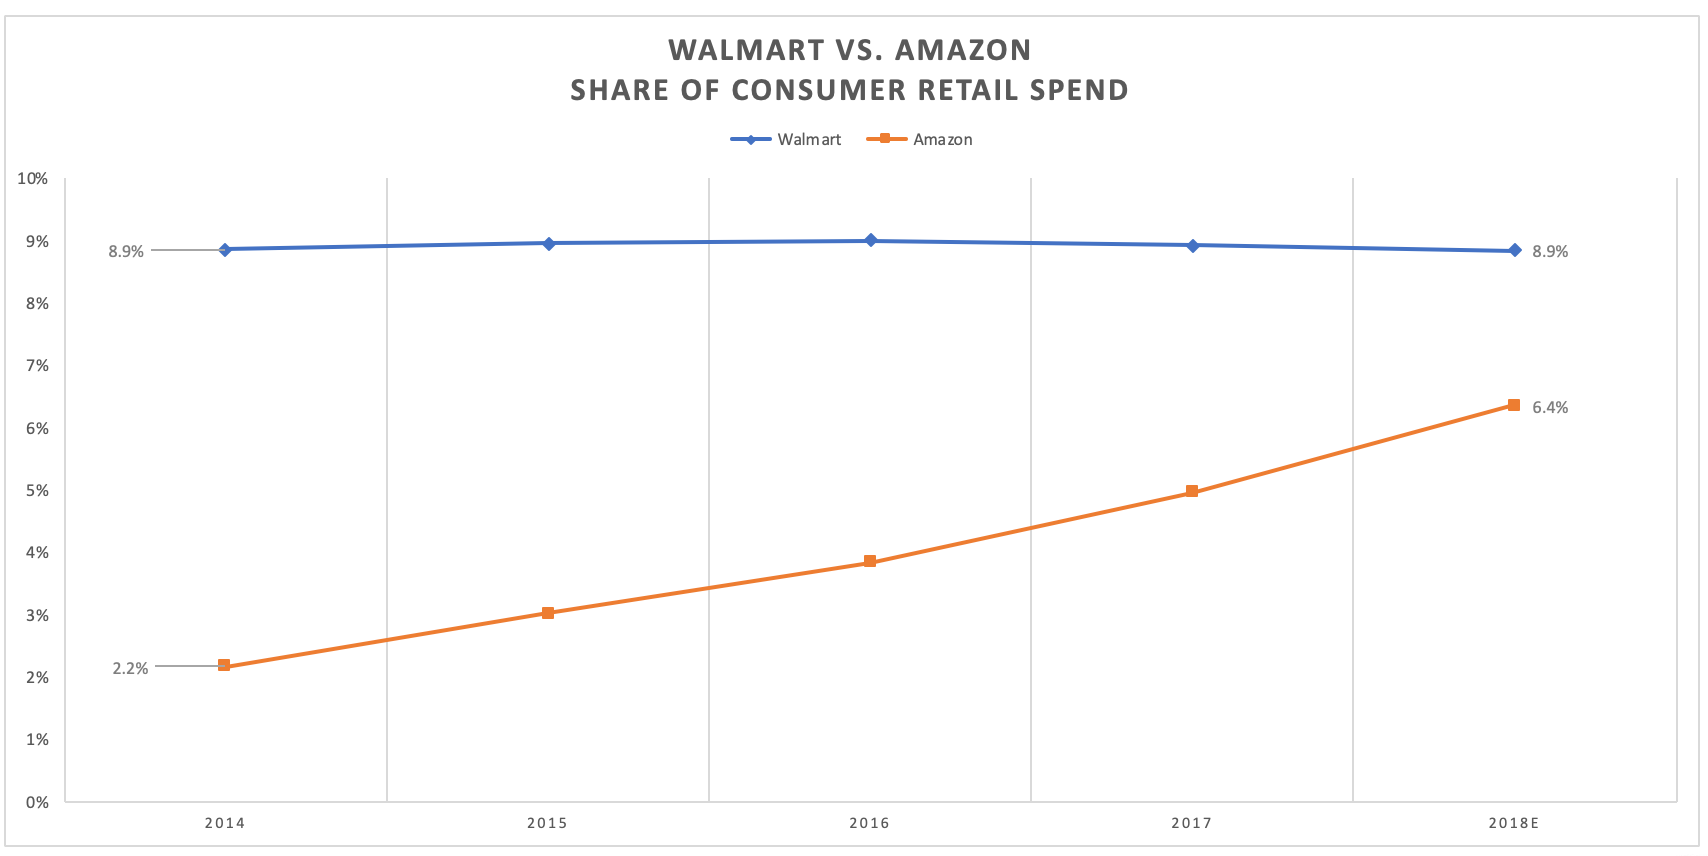 Walmart Revenue Chart